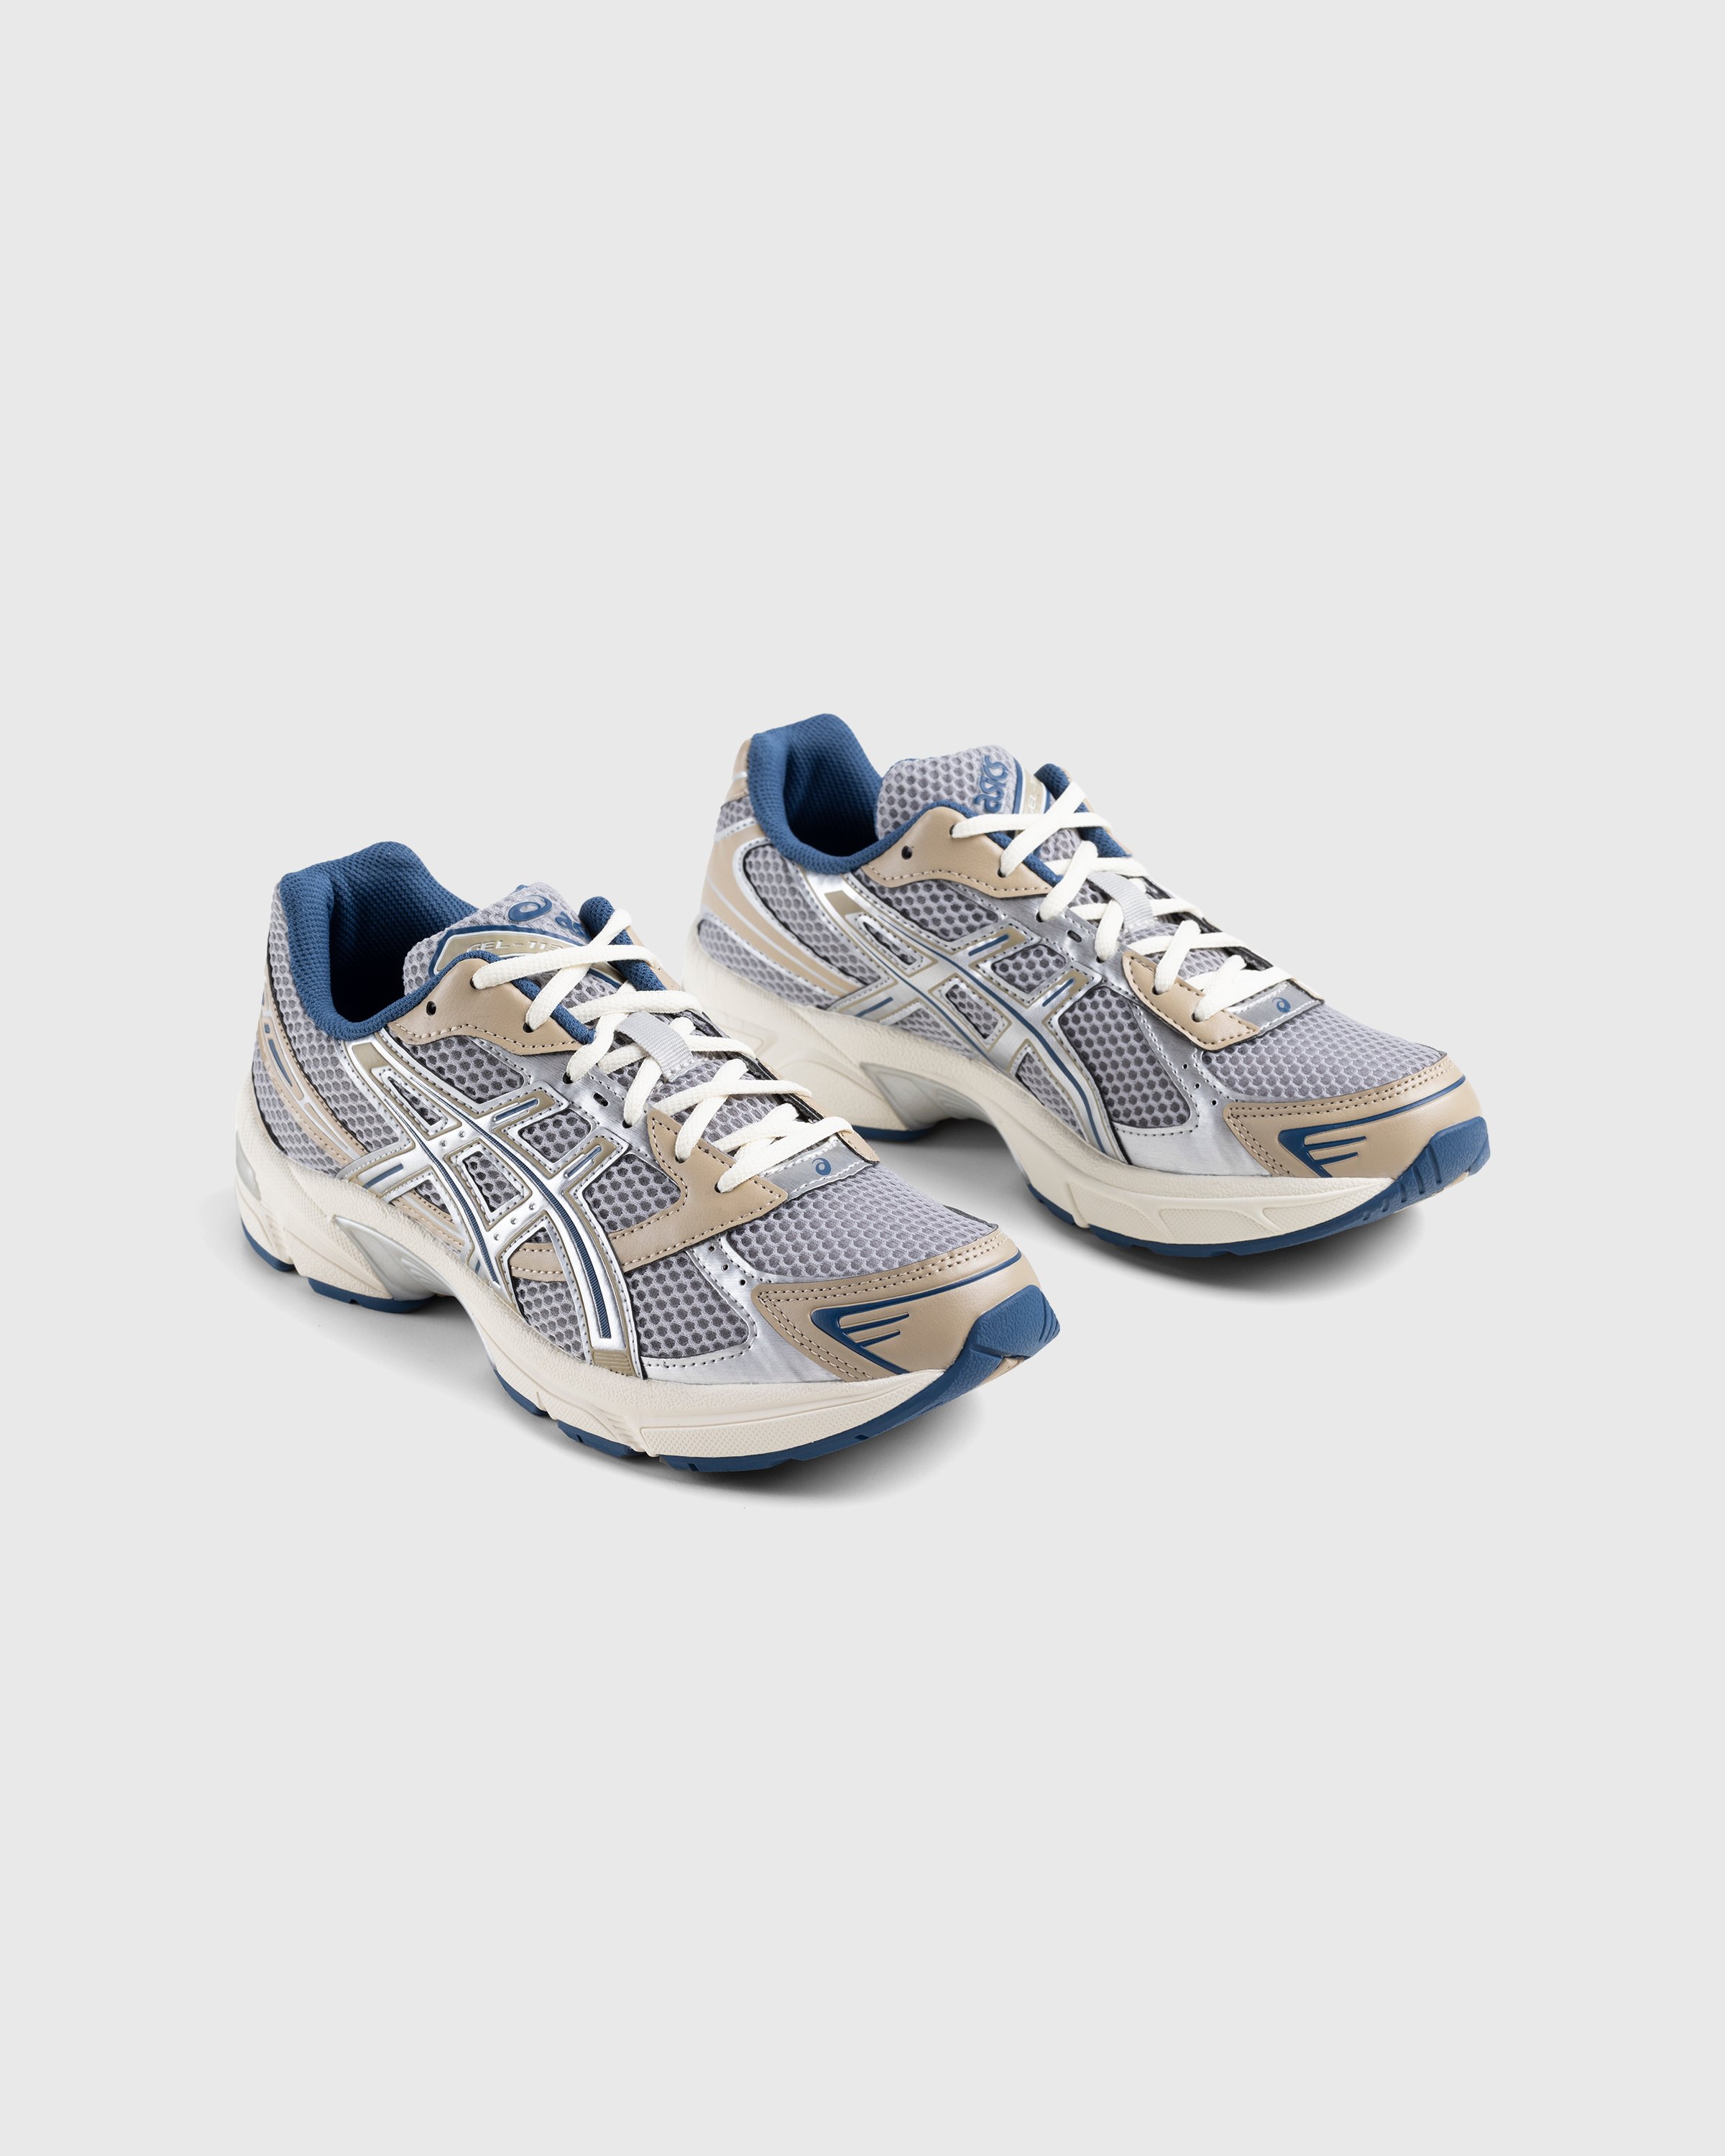 asics - Gel-1130 Oyster Grey Pure Silver - Footwear - Beige - Image 2